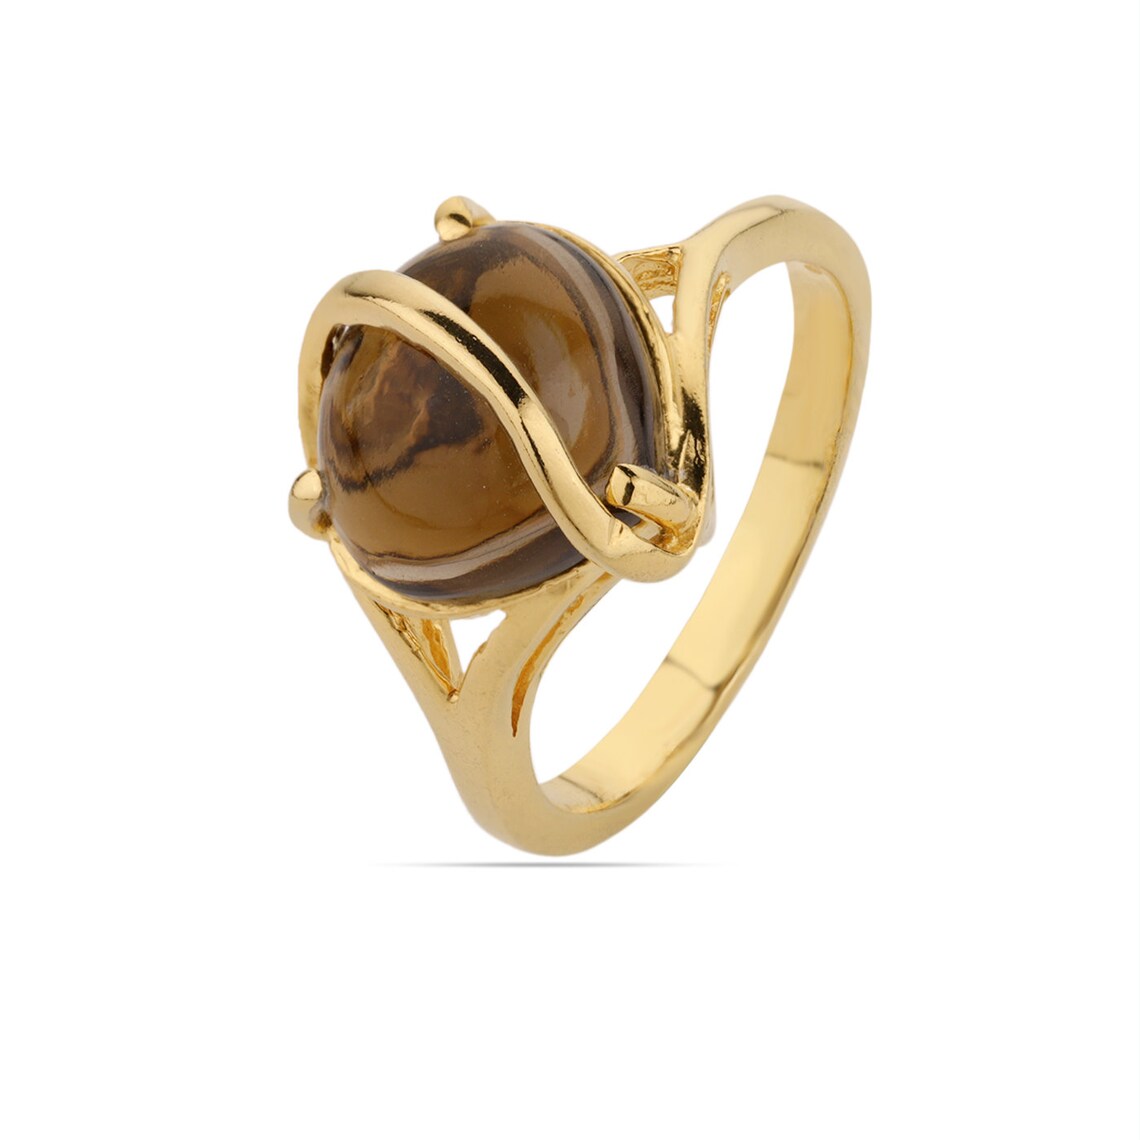 Smoky Quartz Ring, Smoky Quartz Stone, 925 Sterling Silver, Statement Ring, Heart Shape Ring, Cabochon Ring, Smoky Quartz Gold Ring